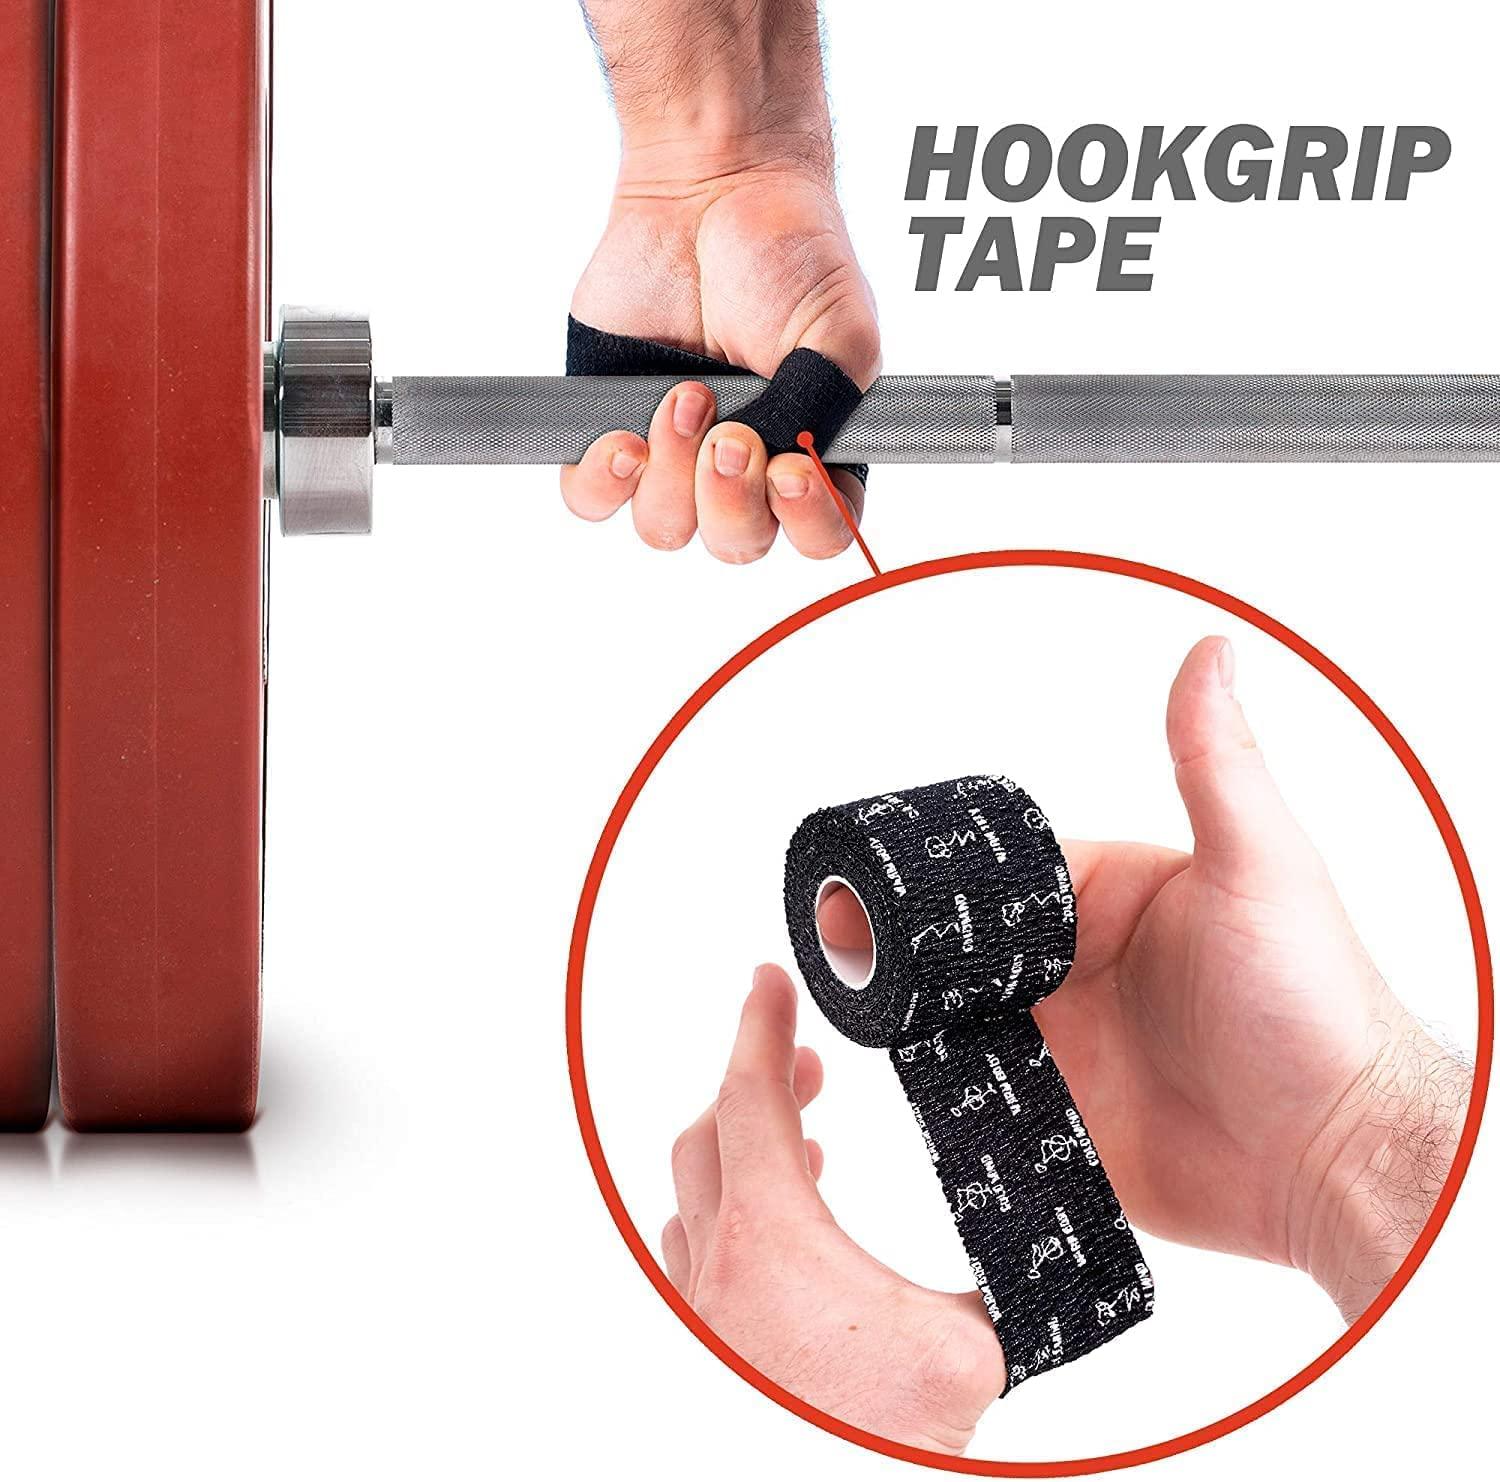 3 ROLLS SPORTTAPE Weightlifting Thumb Tape - EAB for Hookgrip, Crossfit,  Lifting